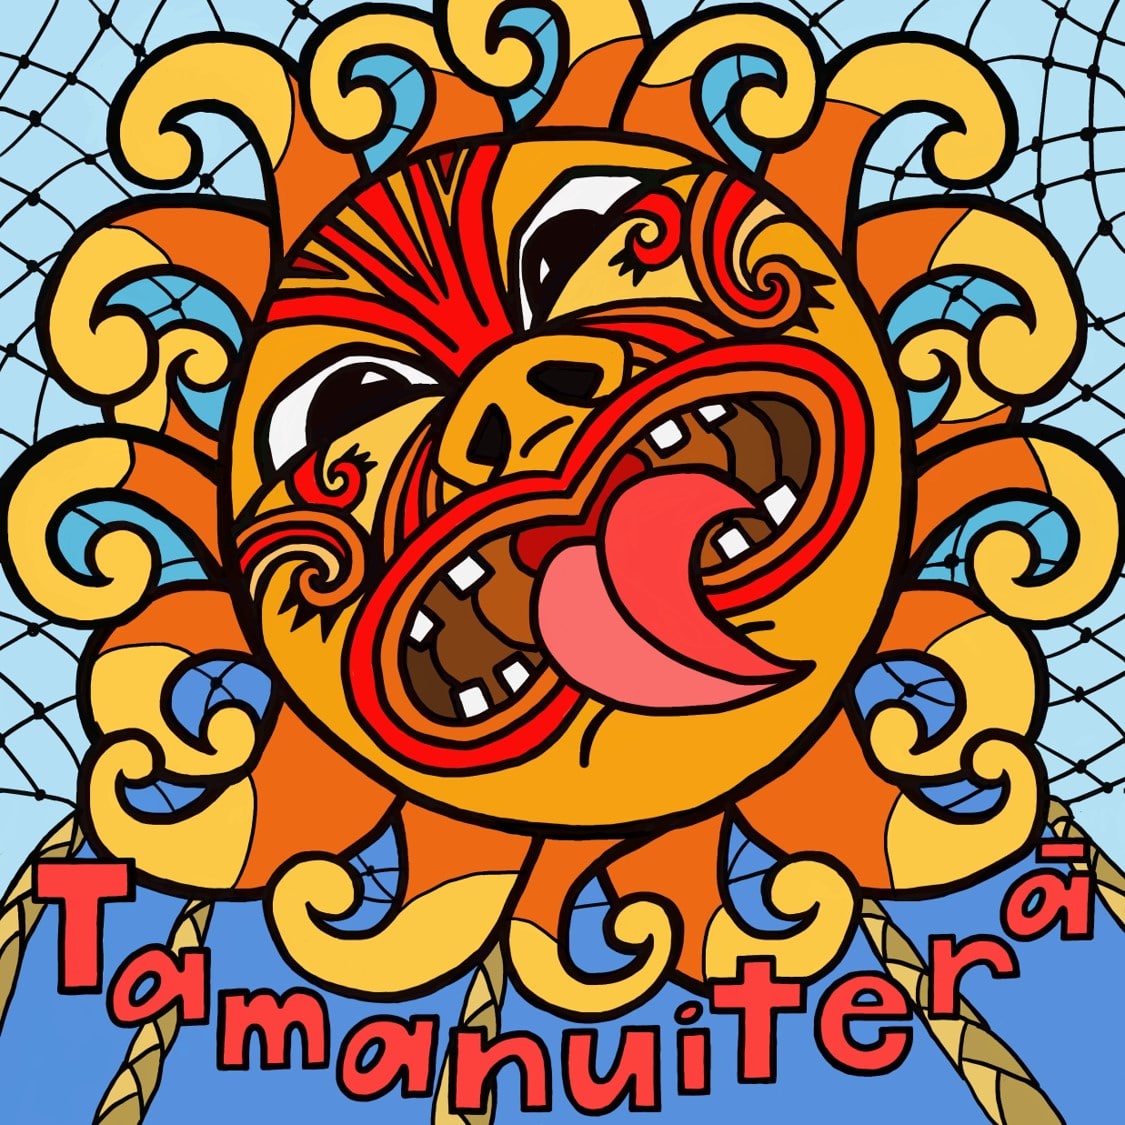 Maori stories - Maui and the Sun